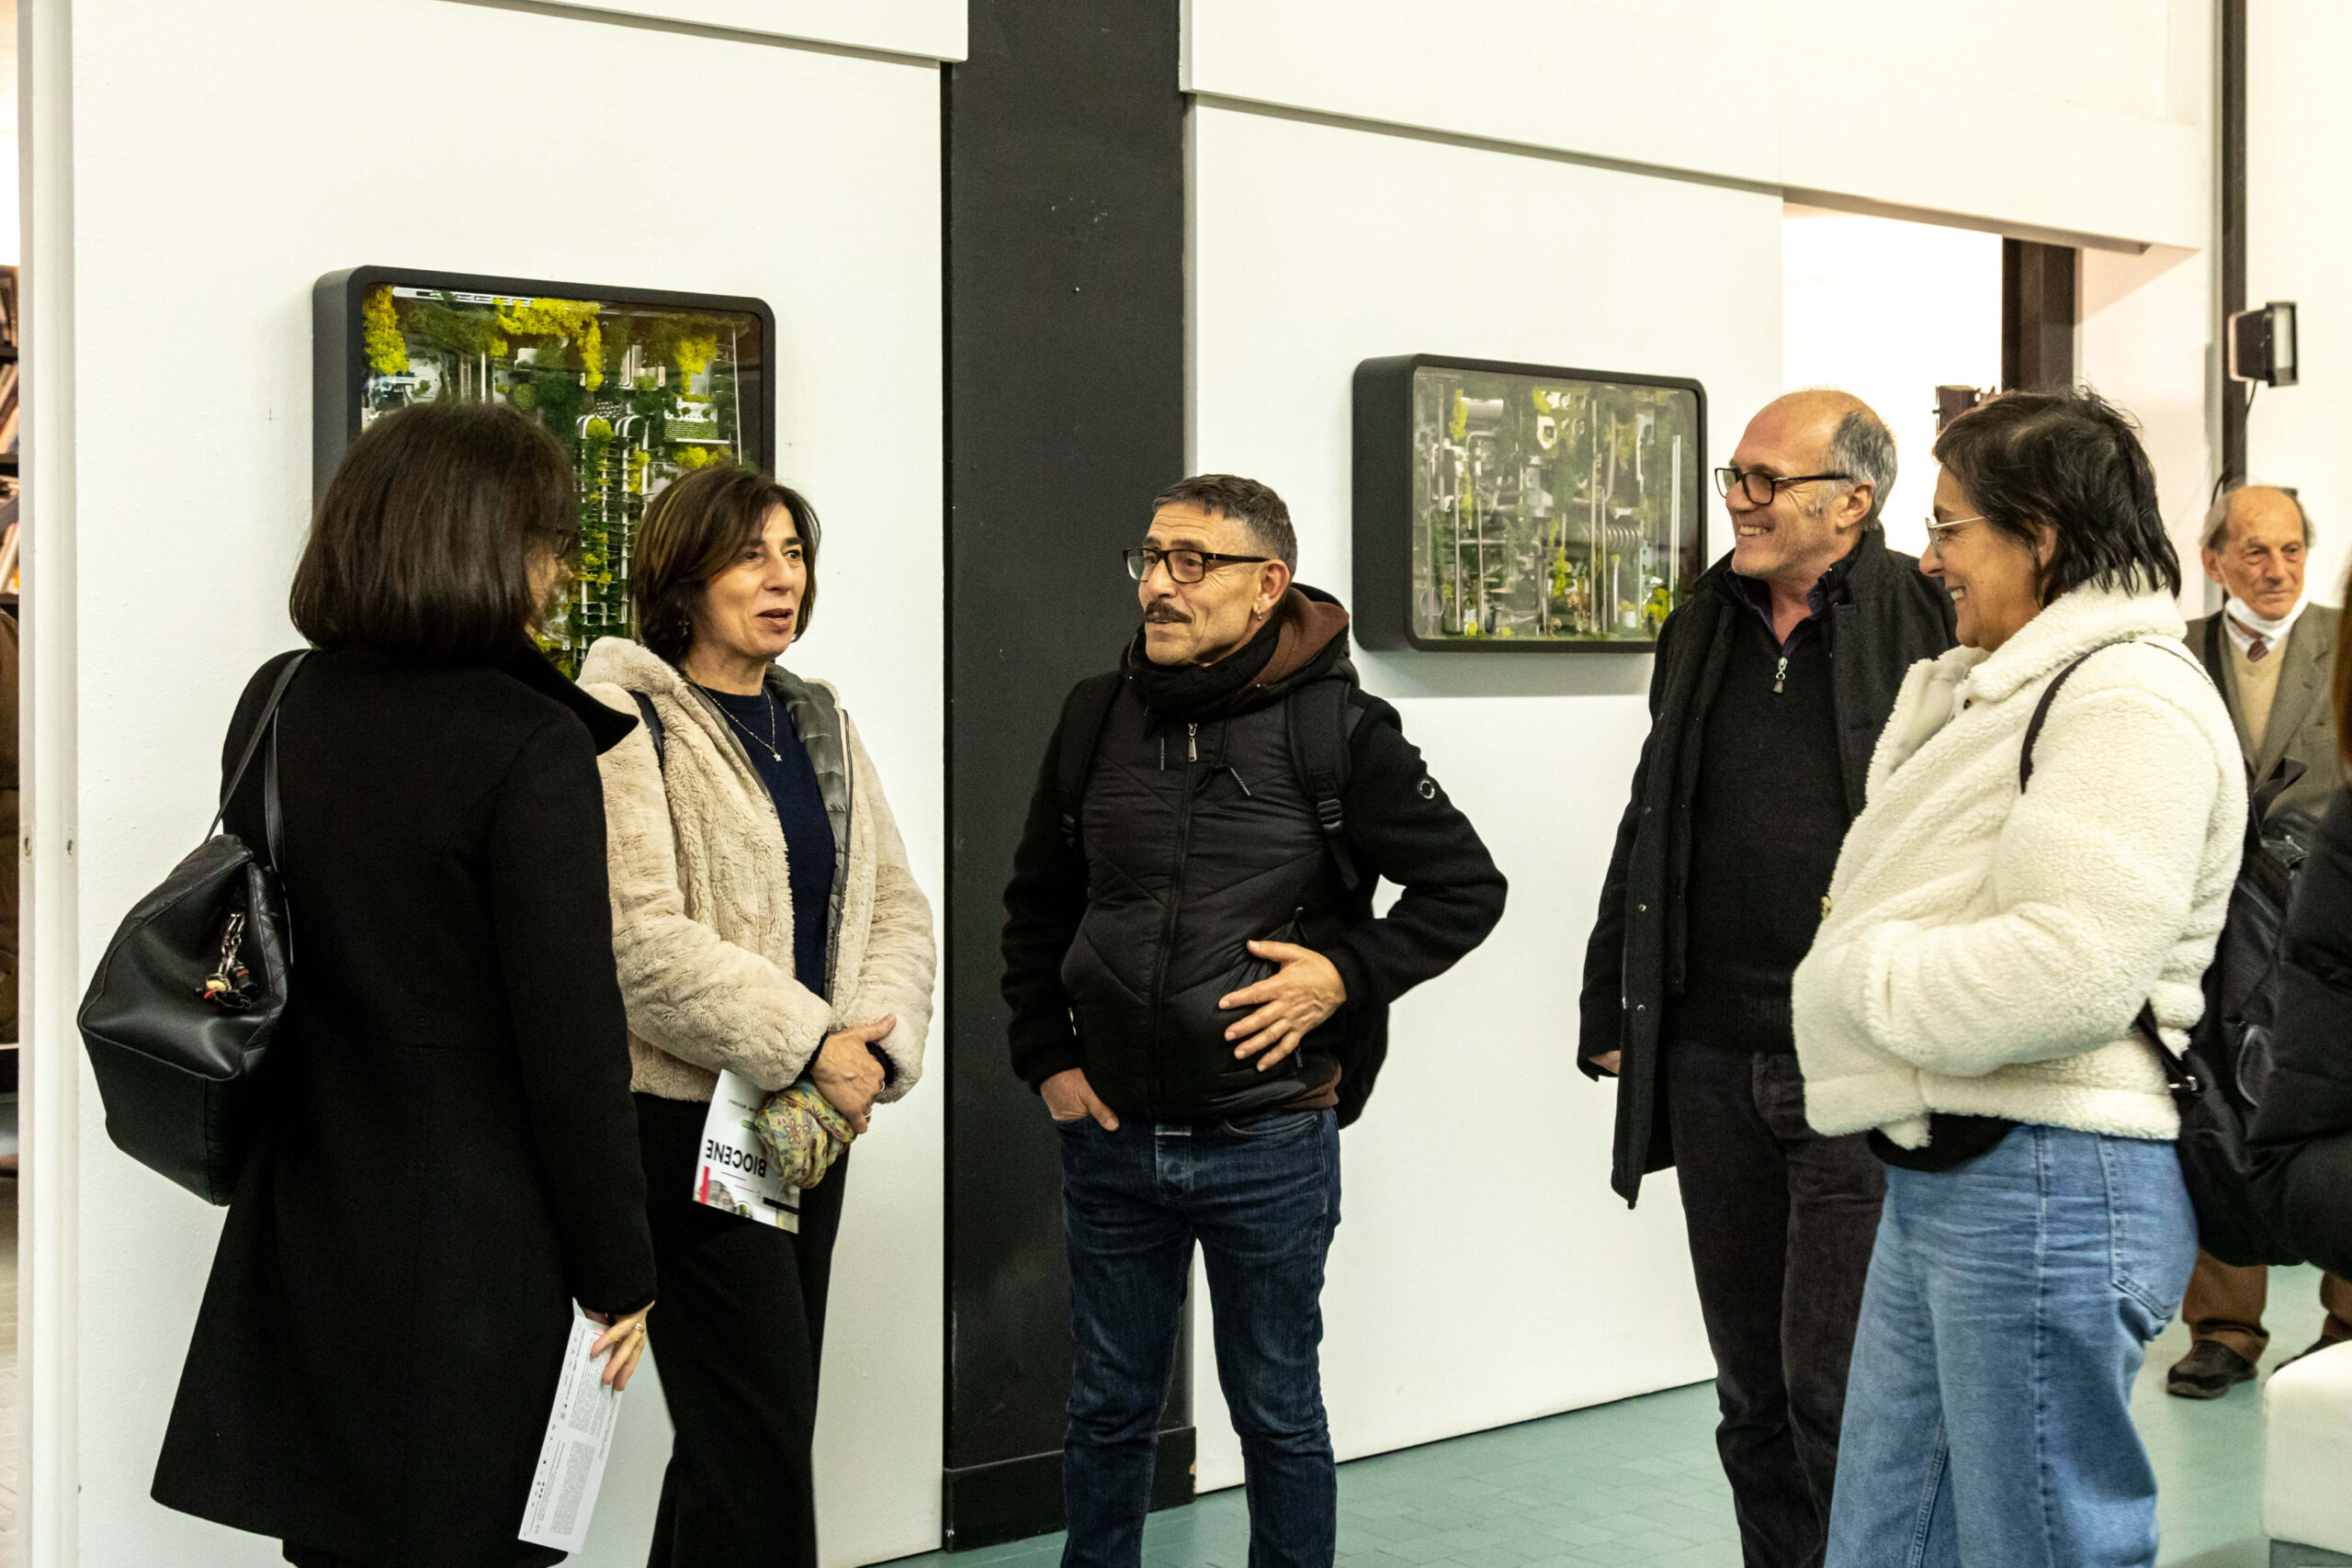 visitors chatting at Biocene opening - Photo: Massimiliano Frau